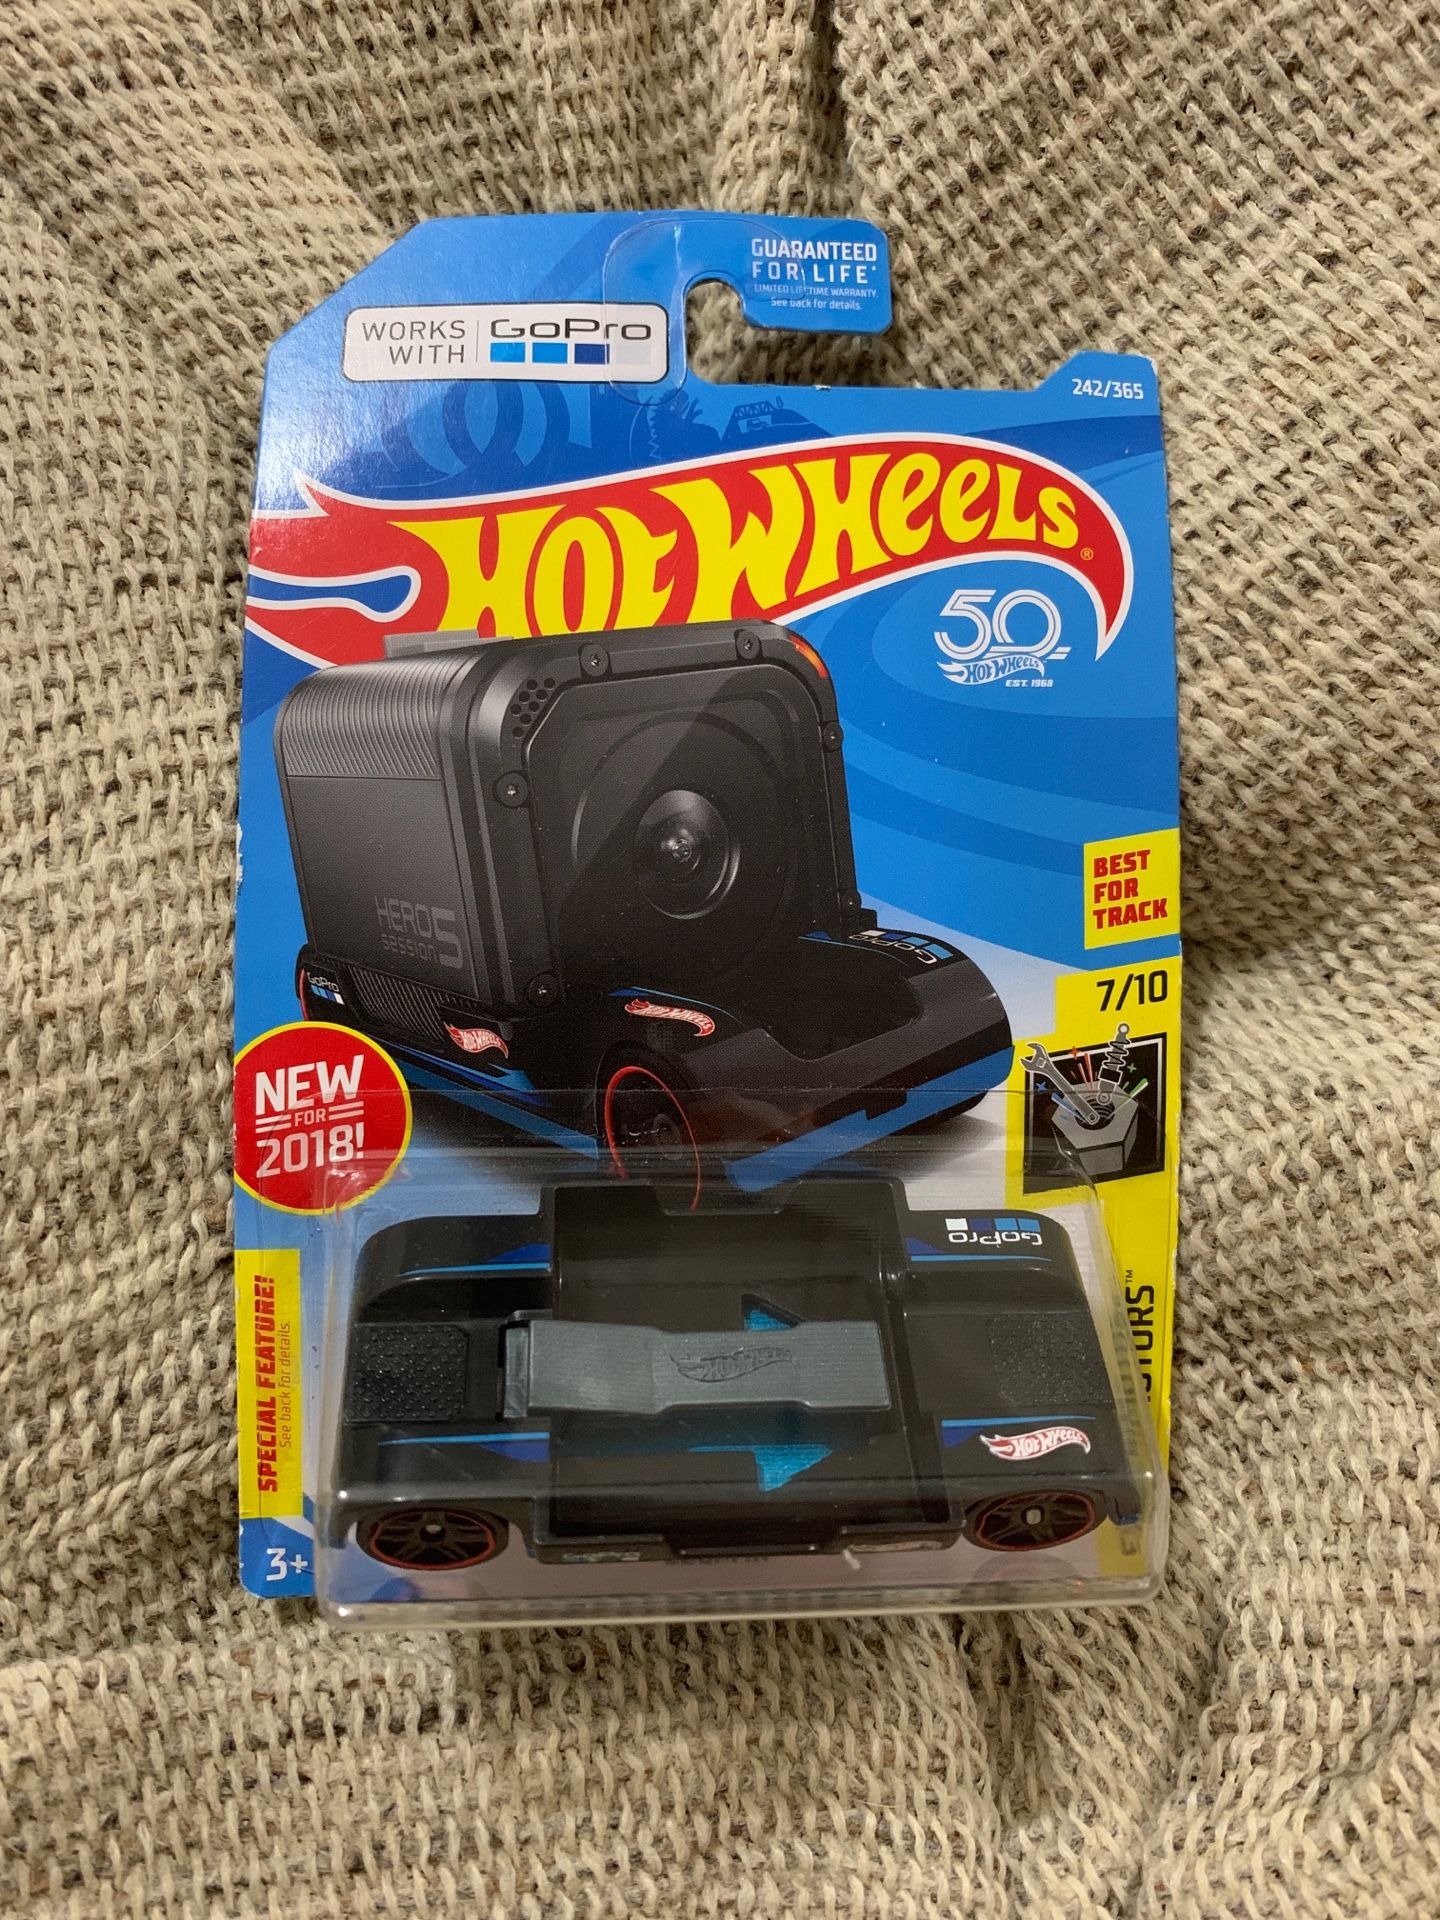 GoPro Hot Wheels car